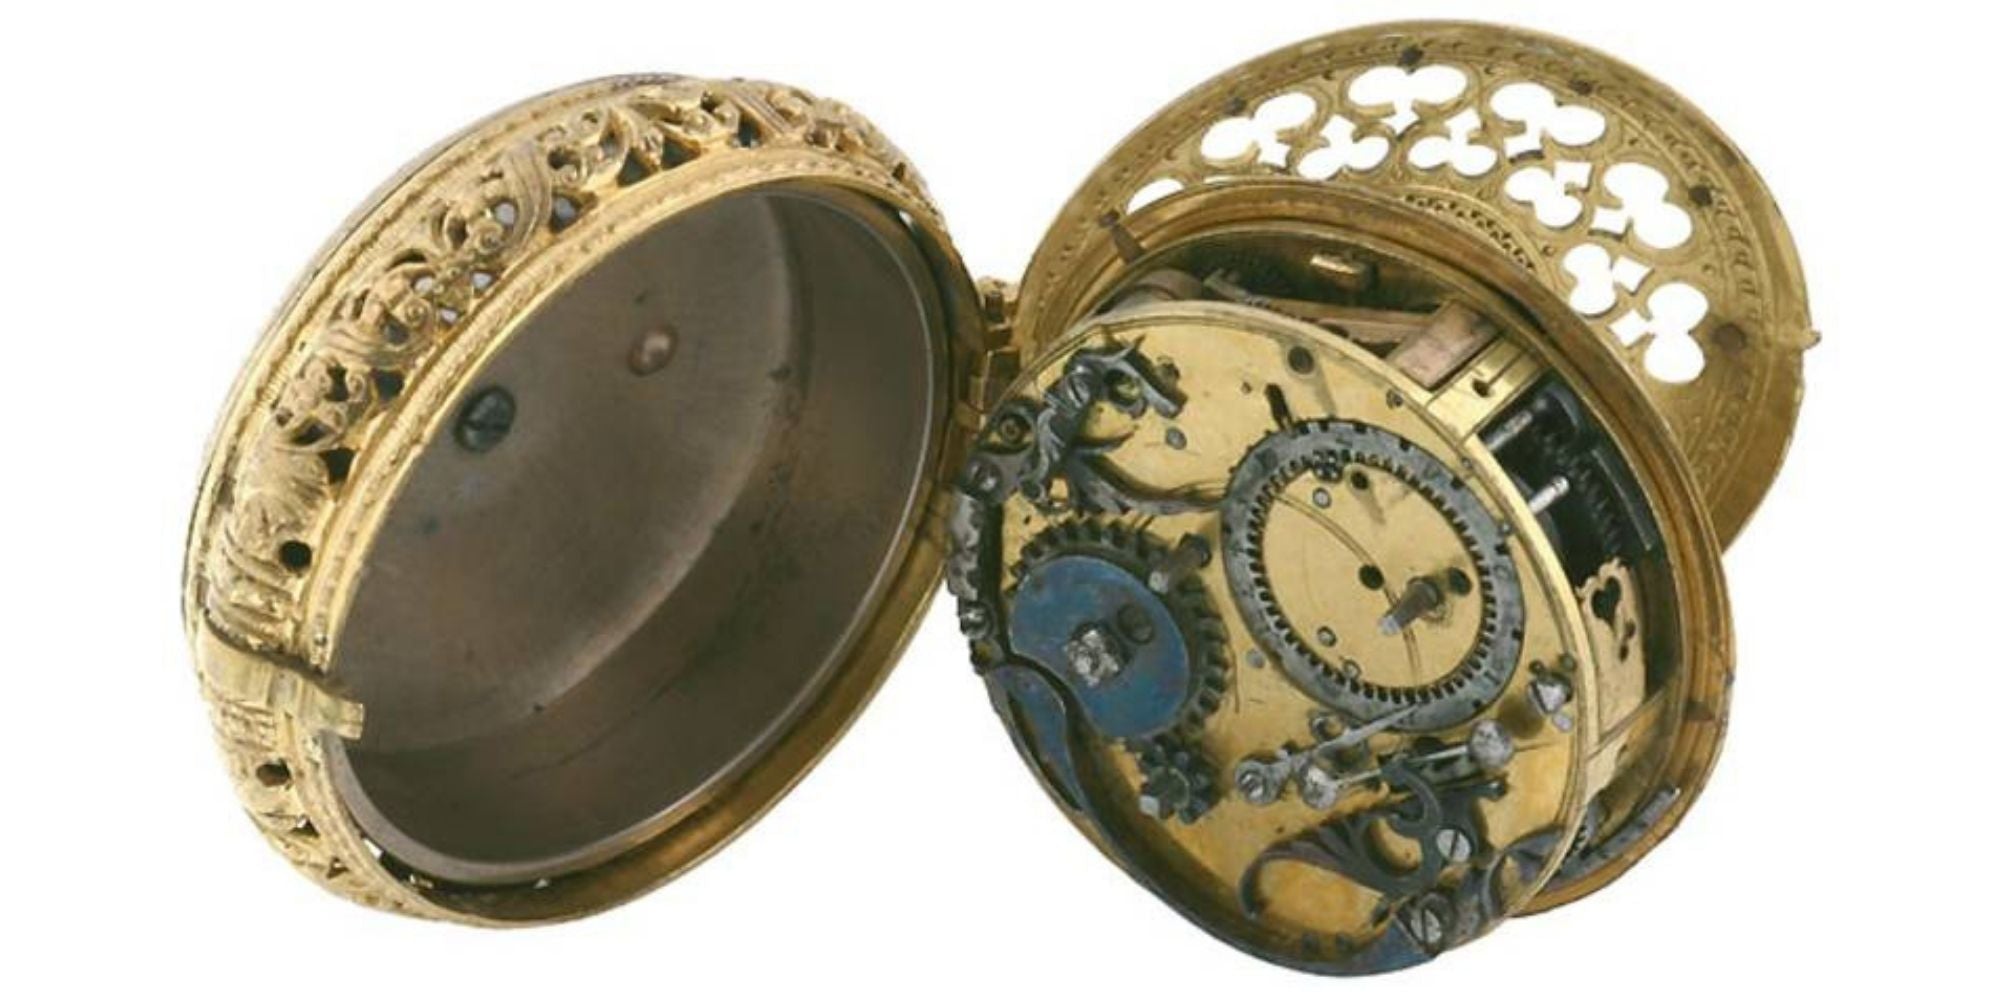 1510: Карманные часы: Петер Хенляйн